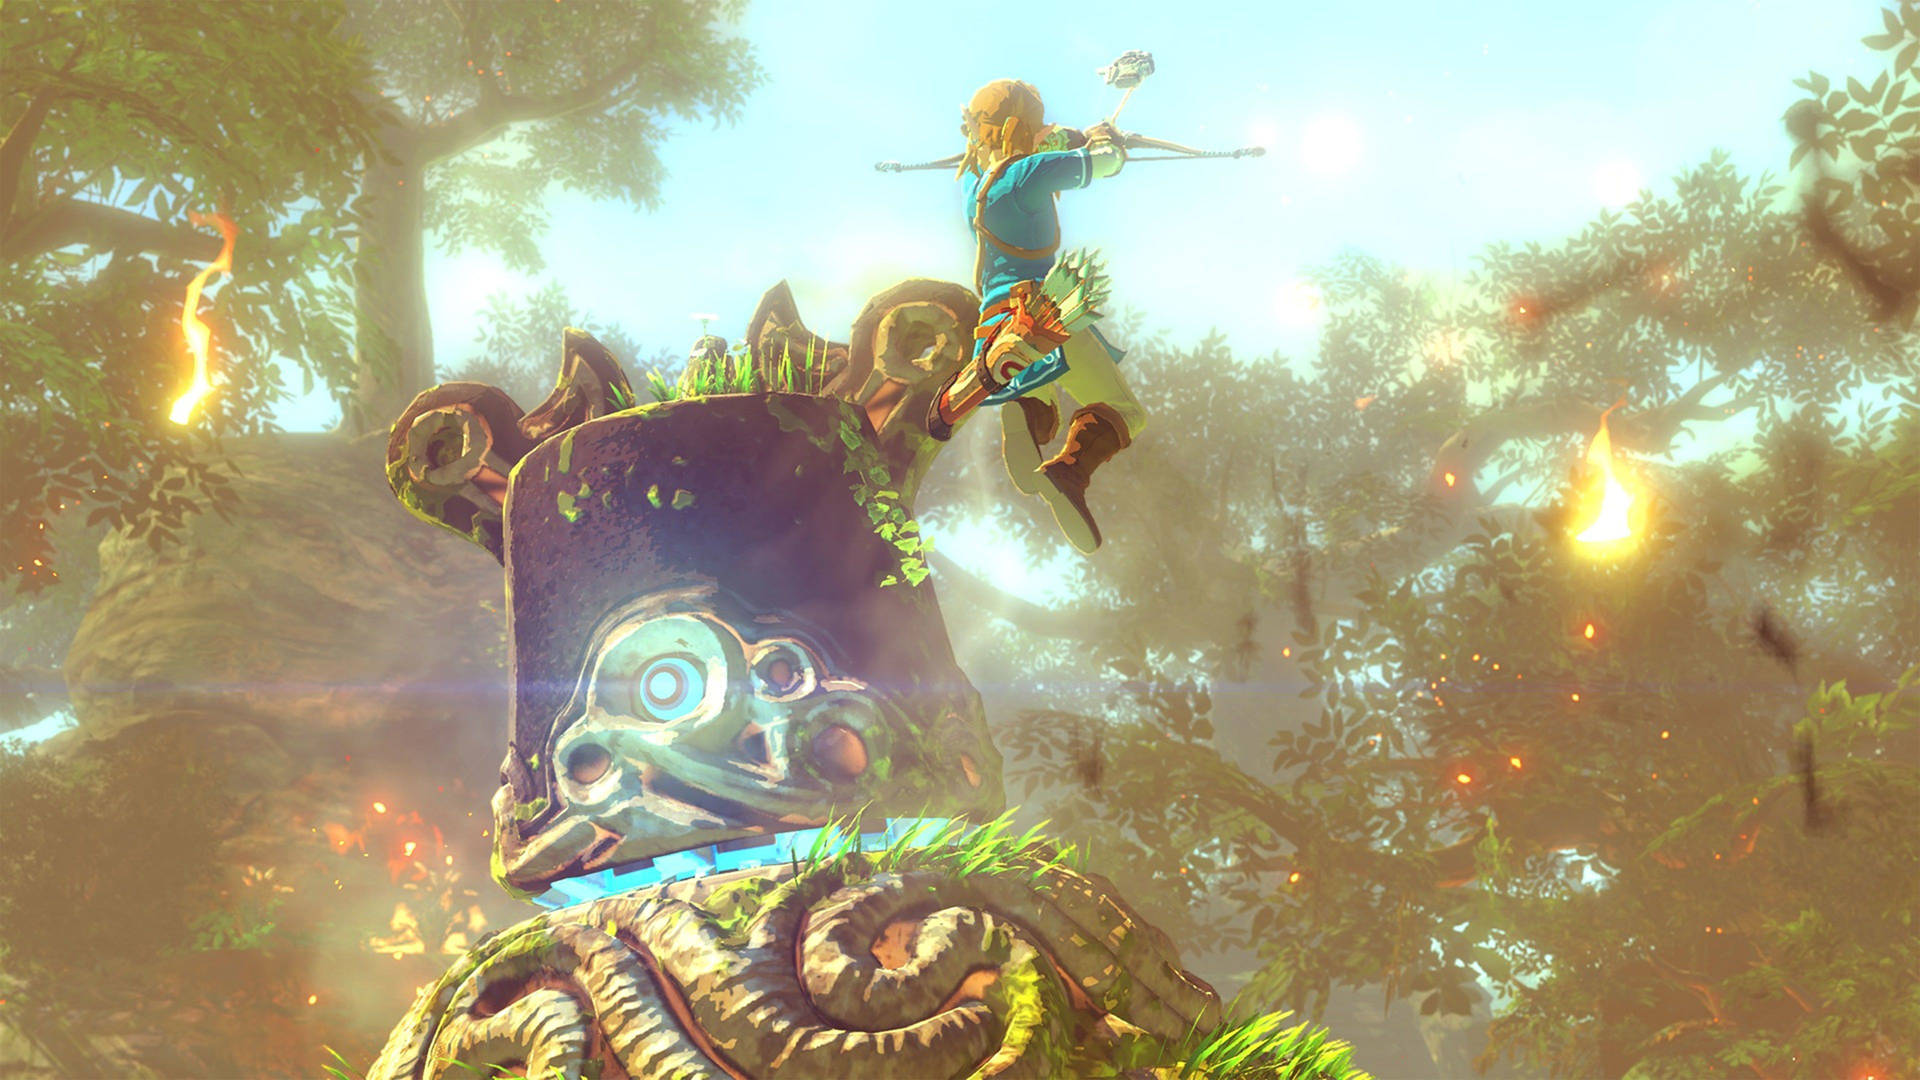 Master the Art of Archery in “The Legend of Zelda: Breath of the Wild” Wallpaper